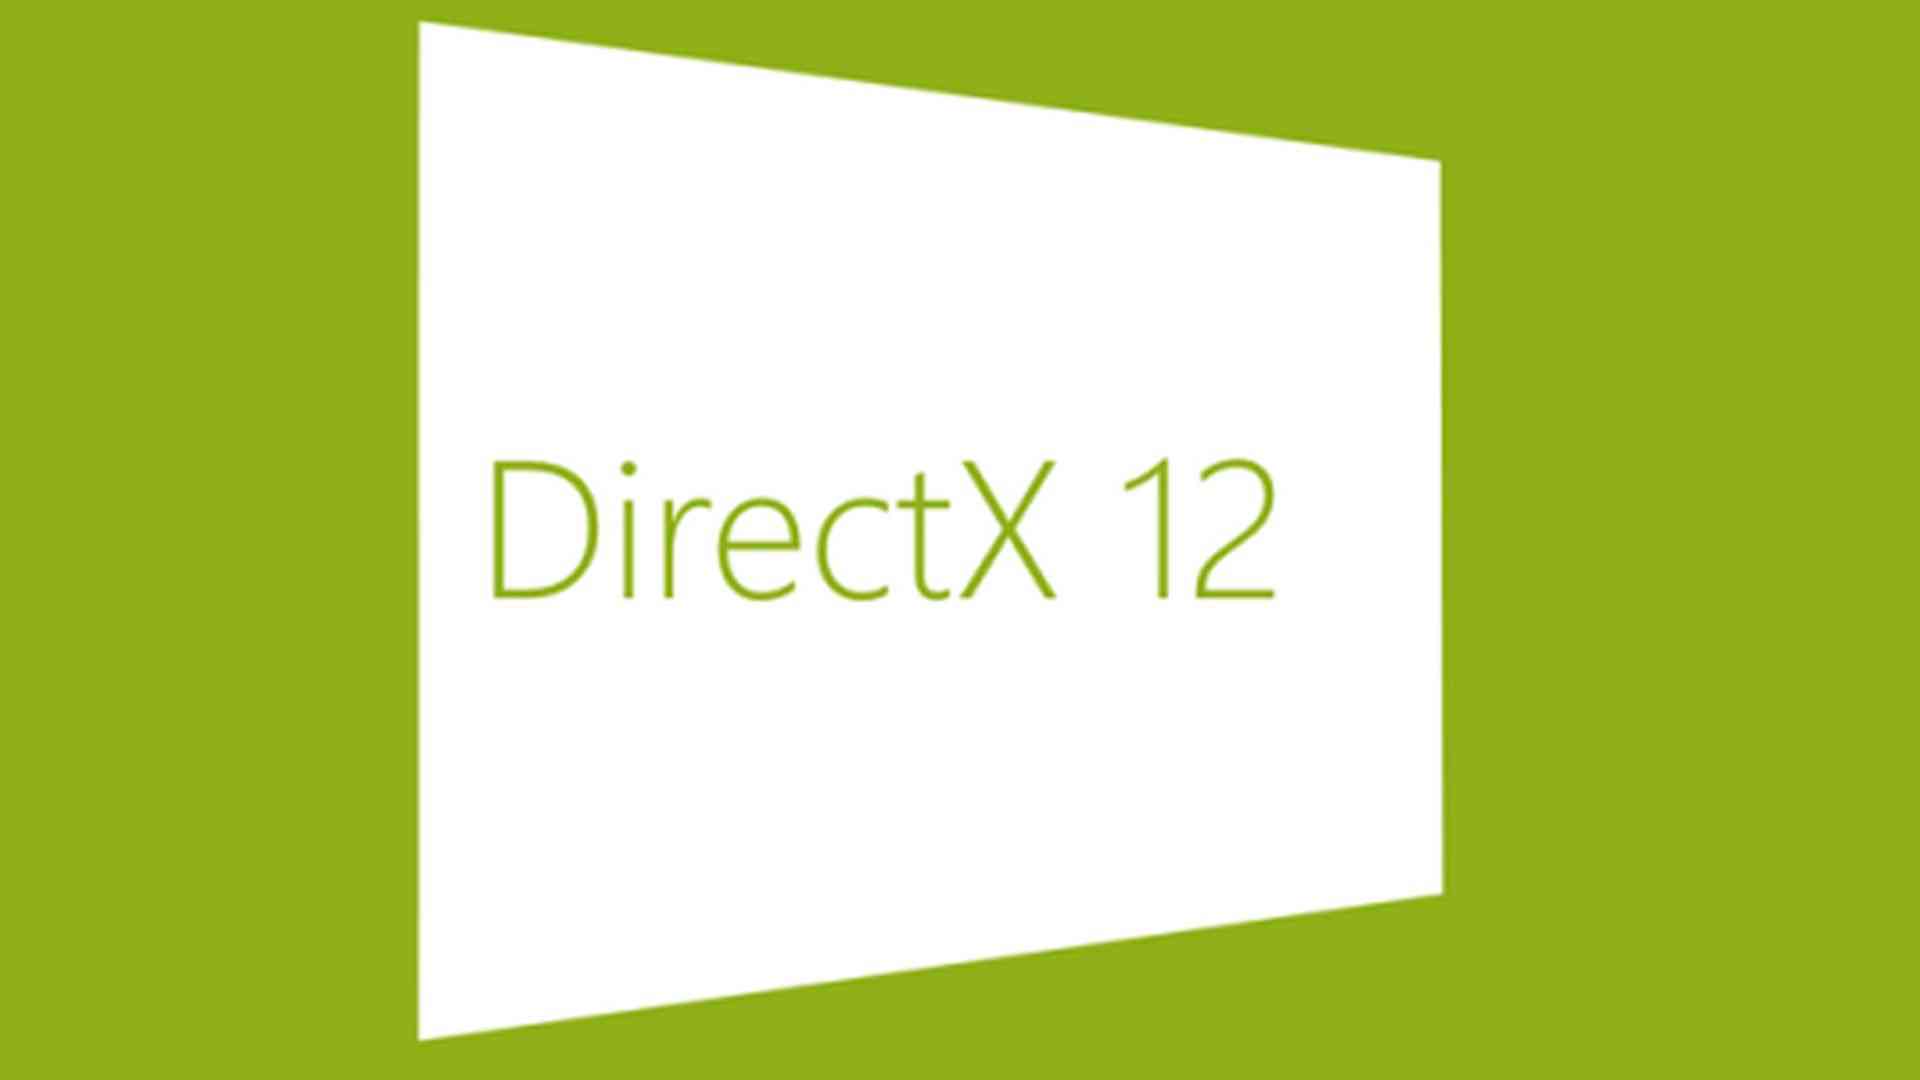 windows 7 is getting directx 12 support 1874 big 1